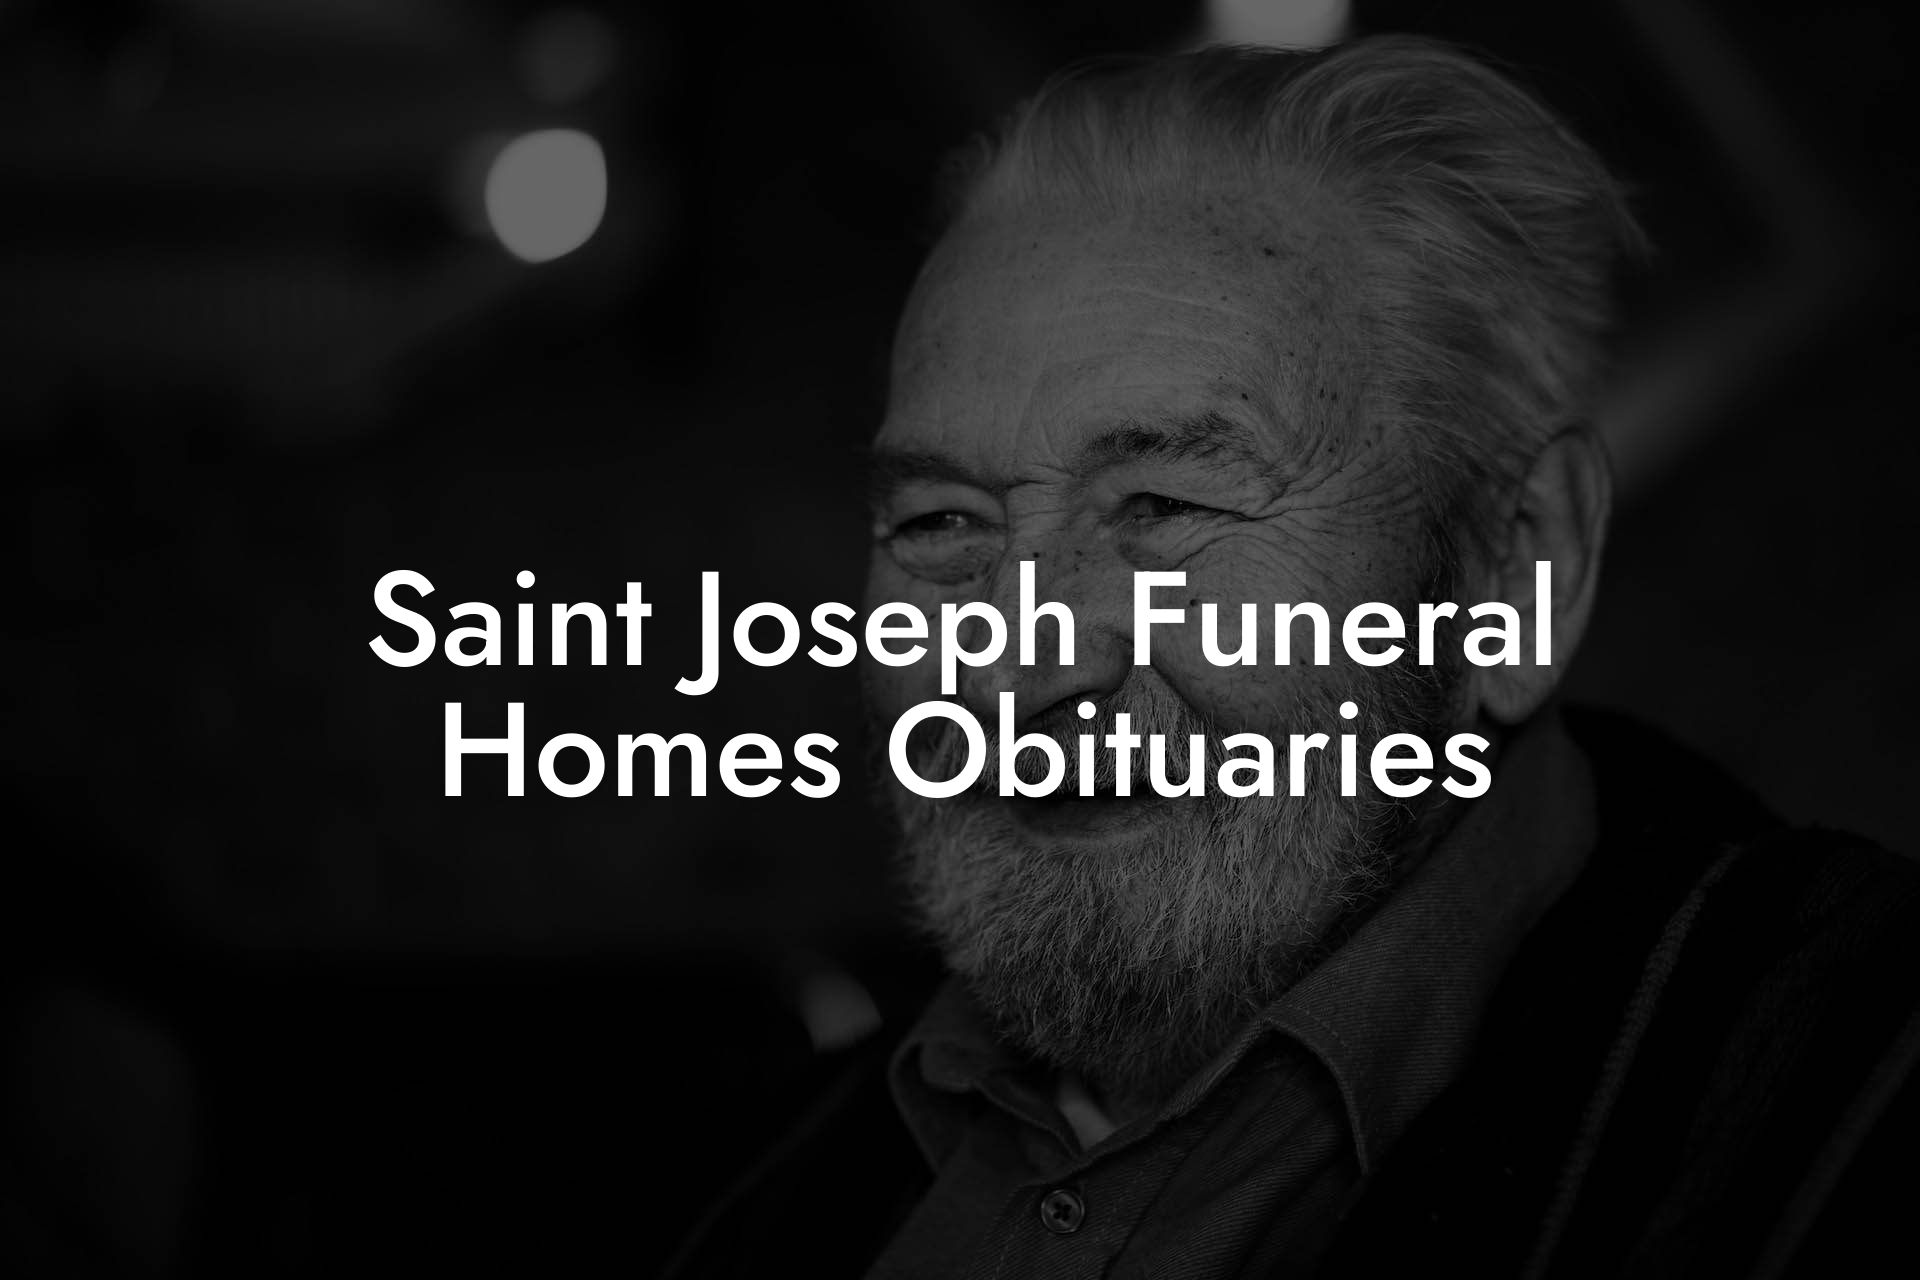 Saint Joseph Funeral Homes Obituaries